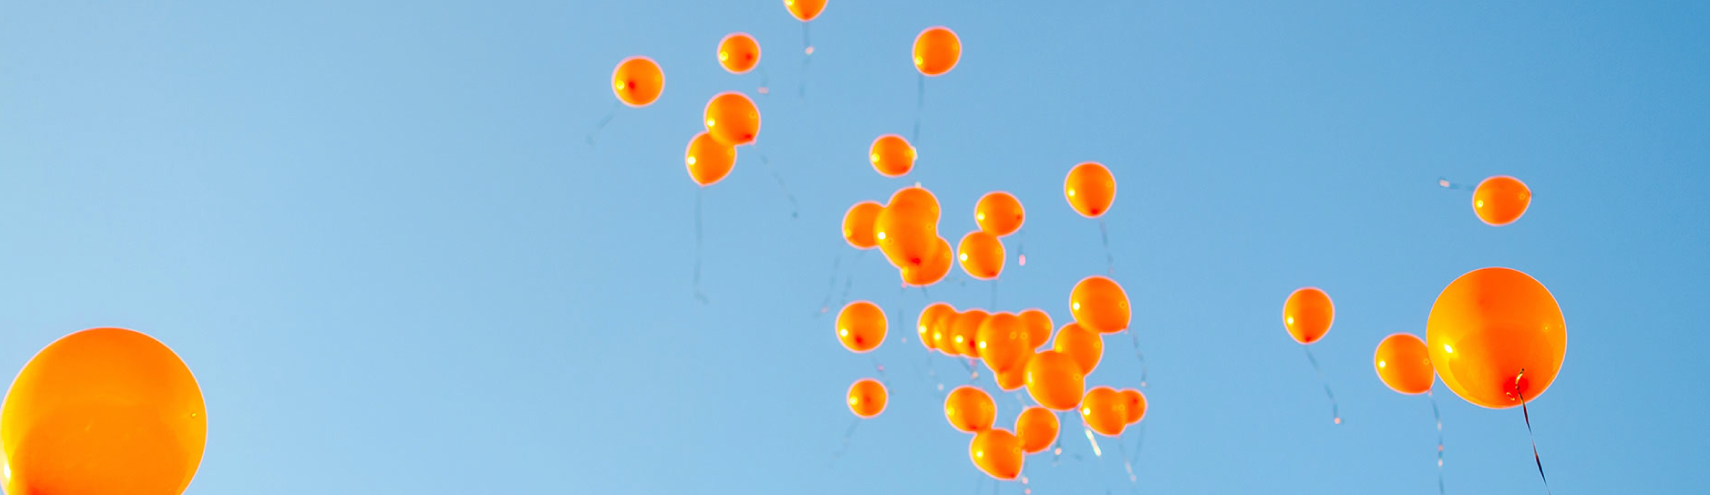 Orange balloons flying through a blue sky.